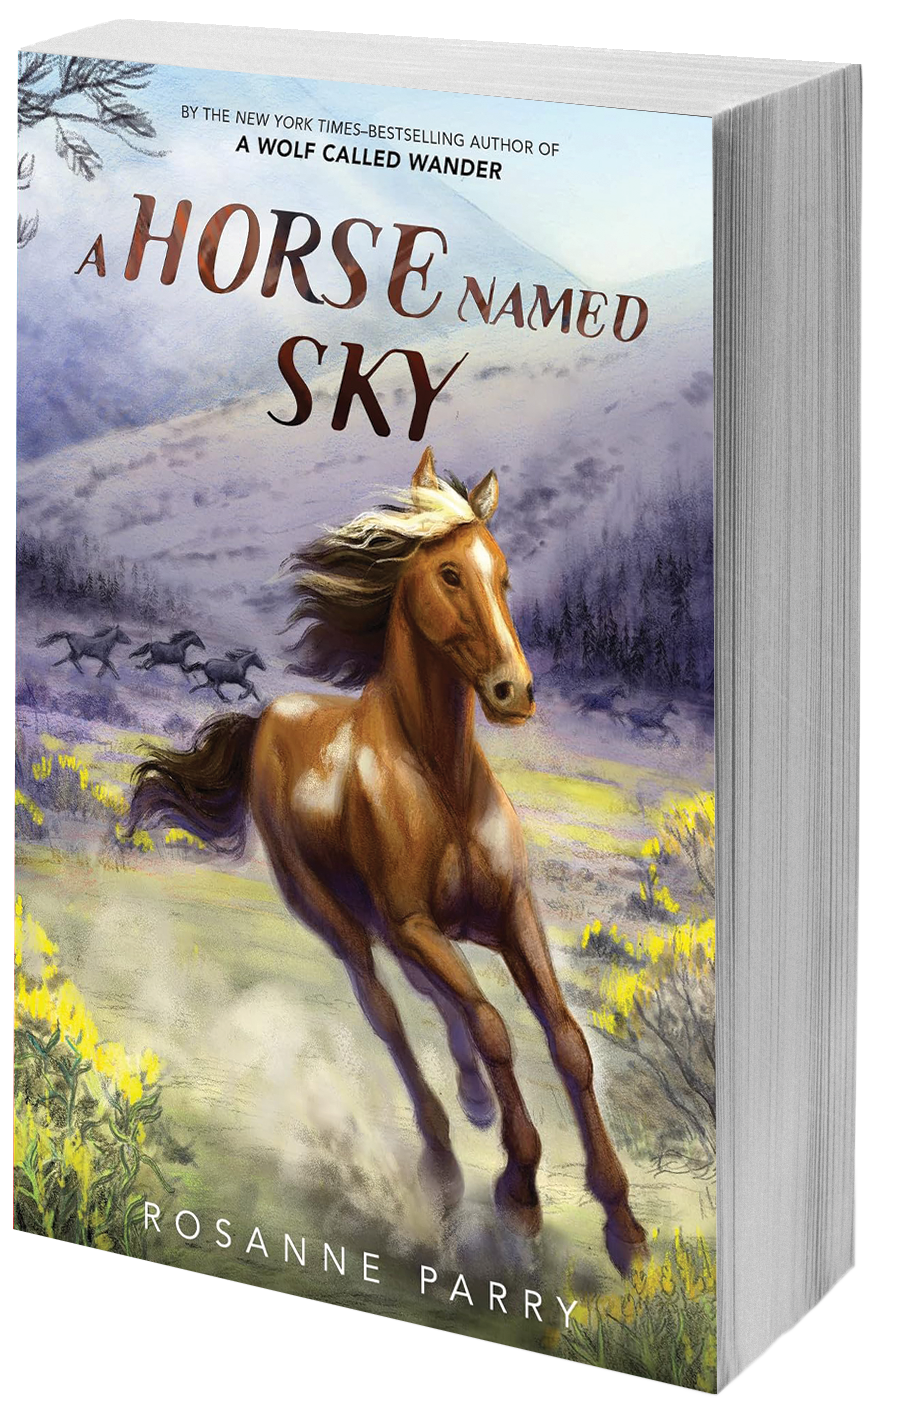 Horse named sky